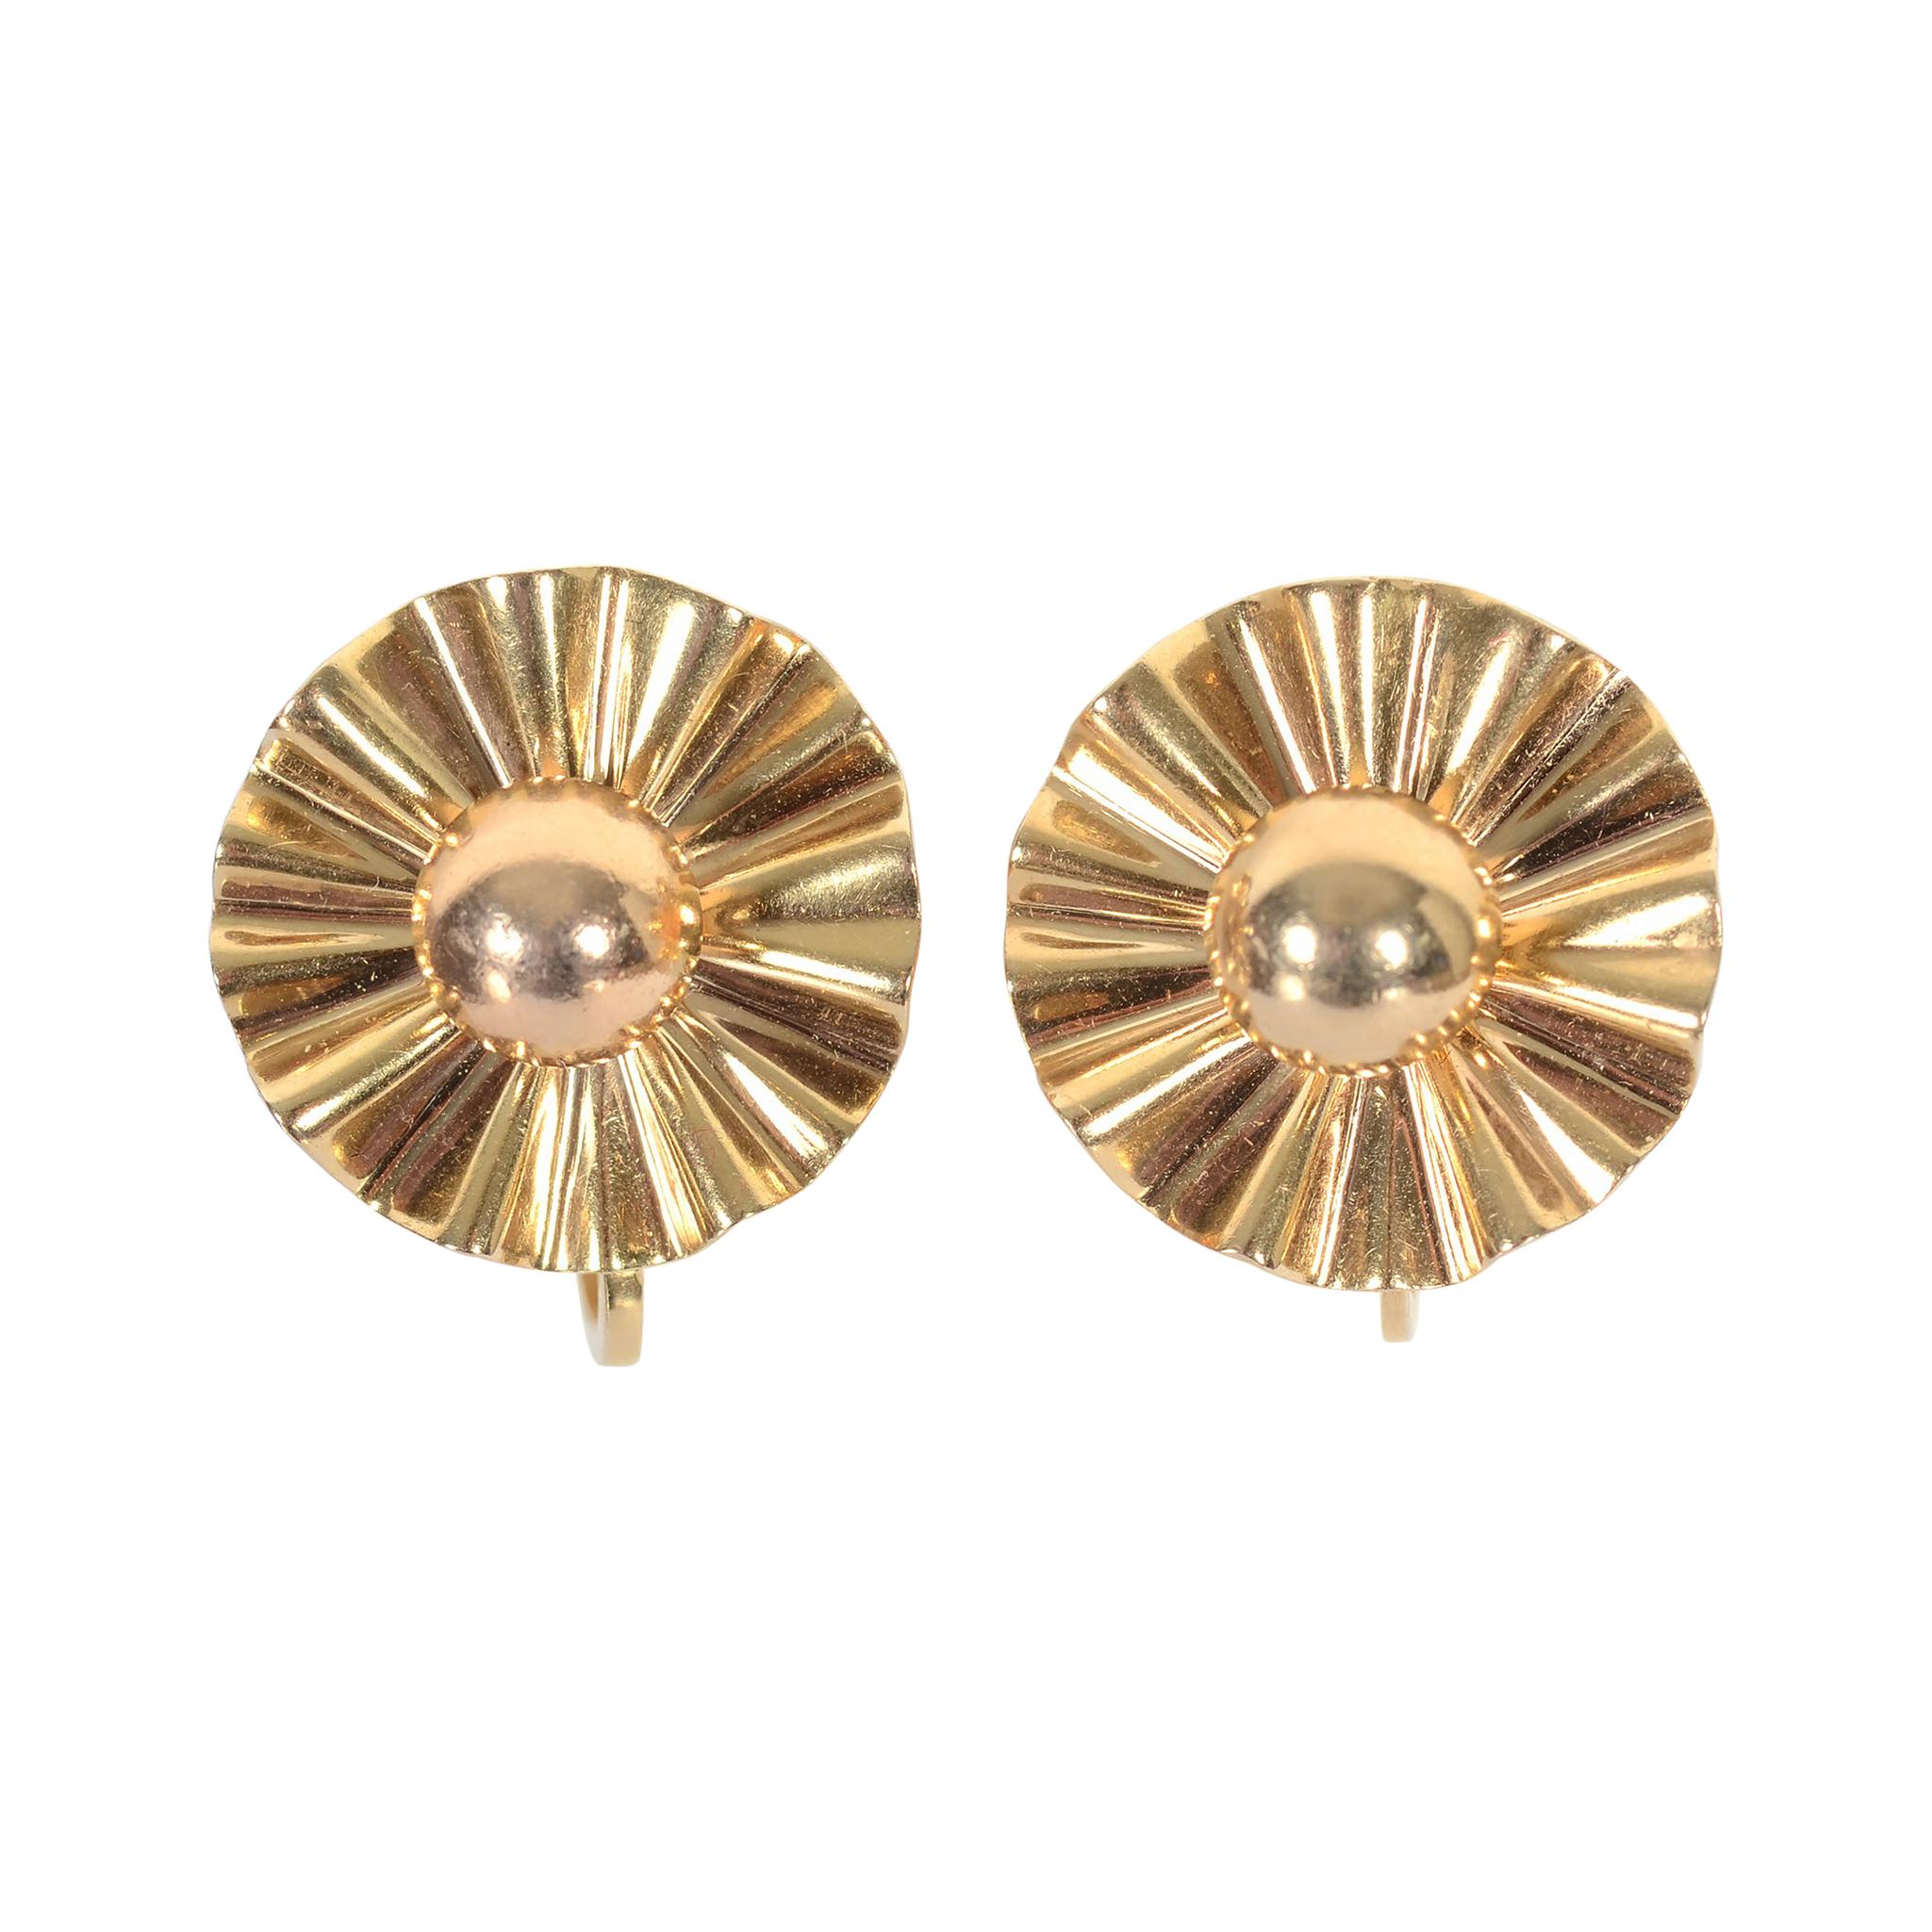 Trabert and Hoeffer Mauboussin Retro Gold Earrings